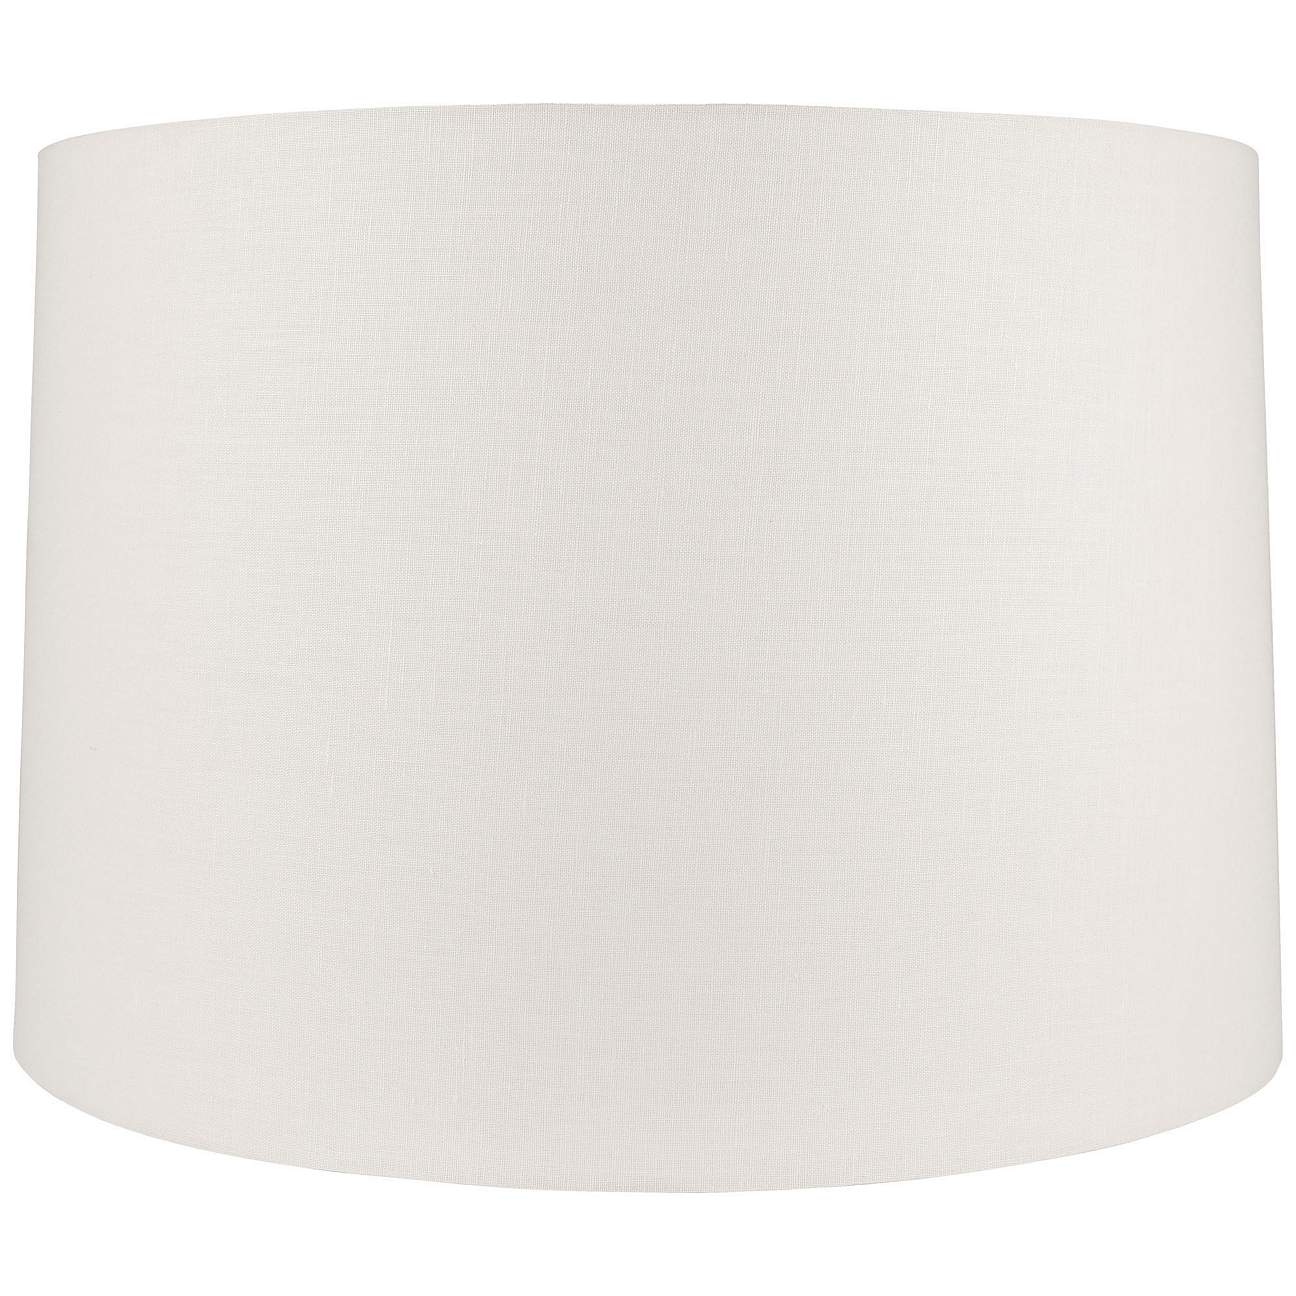 Off-White Linen Round Drum Shade 15x16x11 (Spider) - #8M206 | Lamps Plus